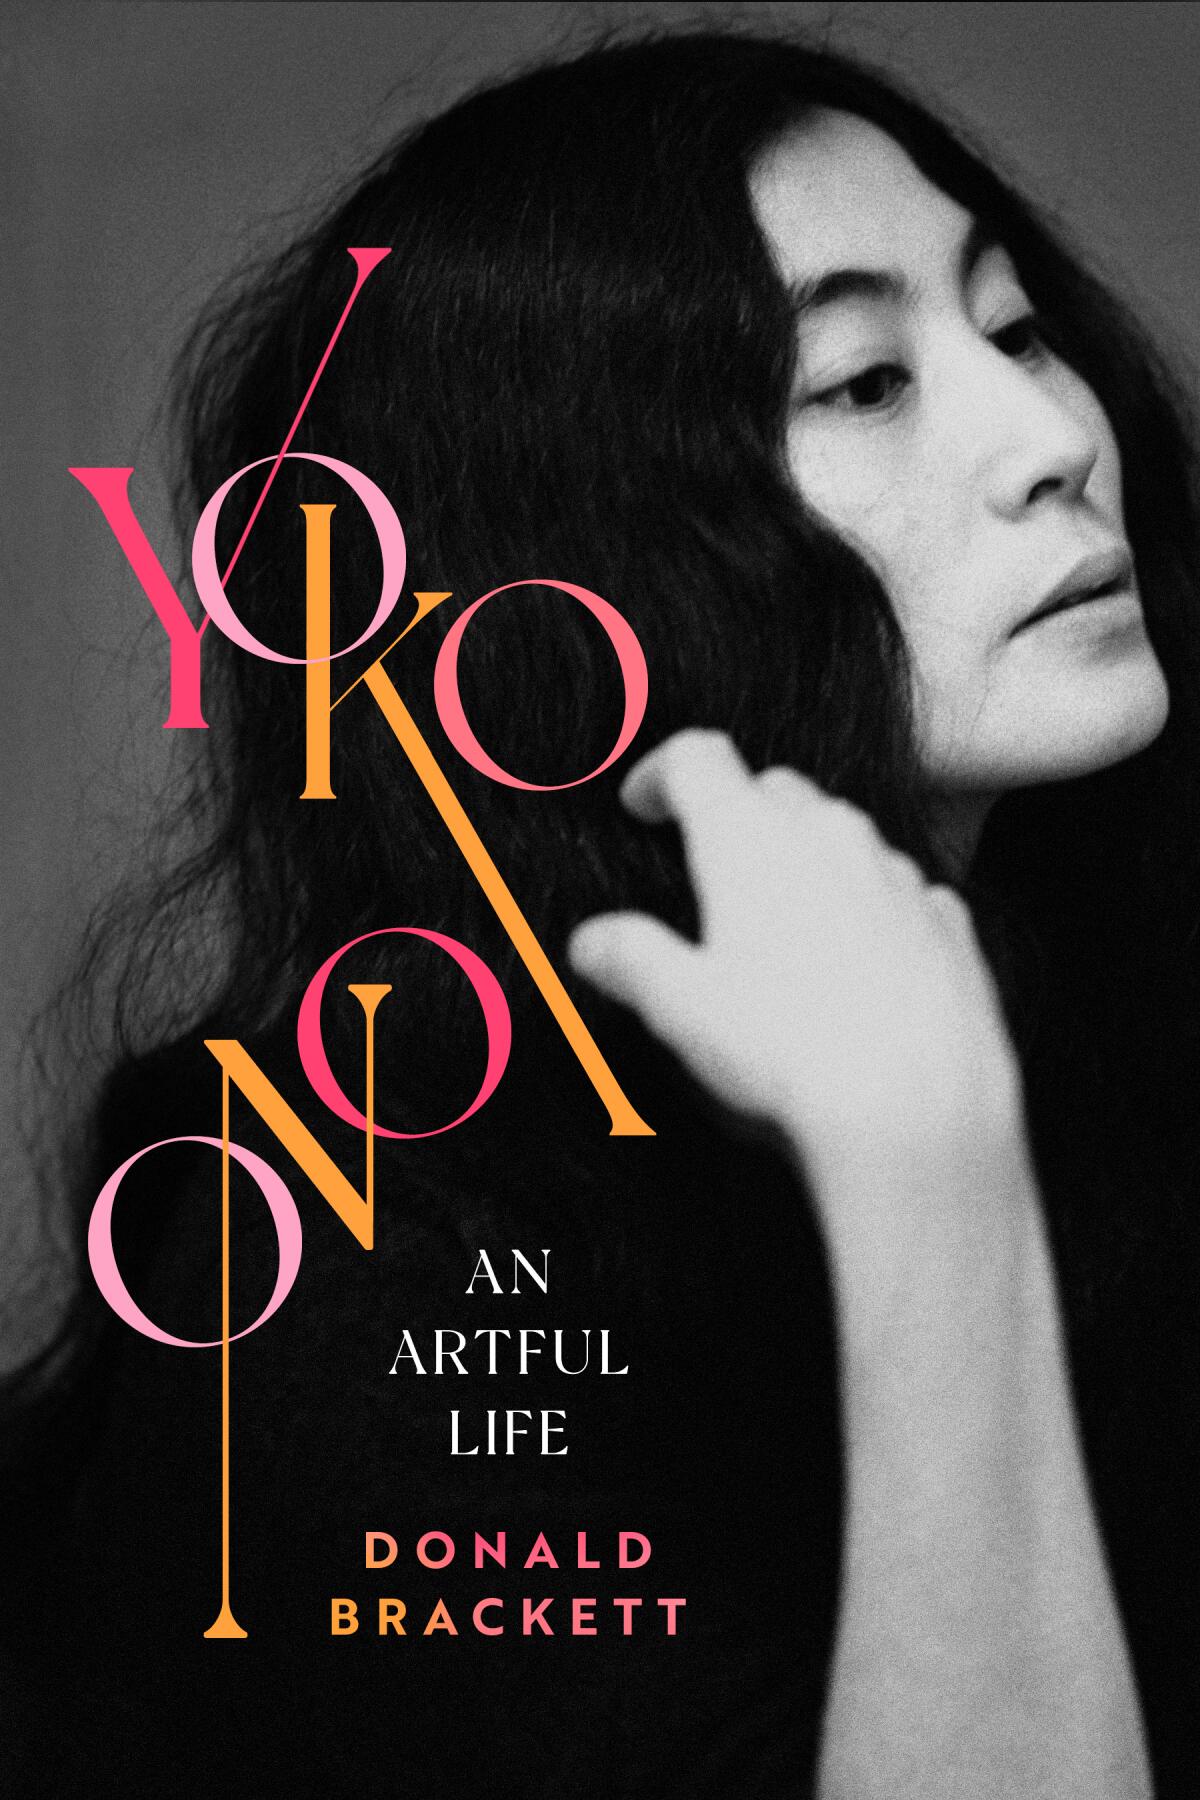 Review: Donald Brackett bio 'Yoko Ono' finally gives credit - Los Angeles  Times